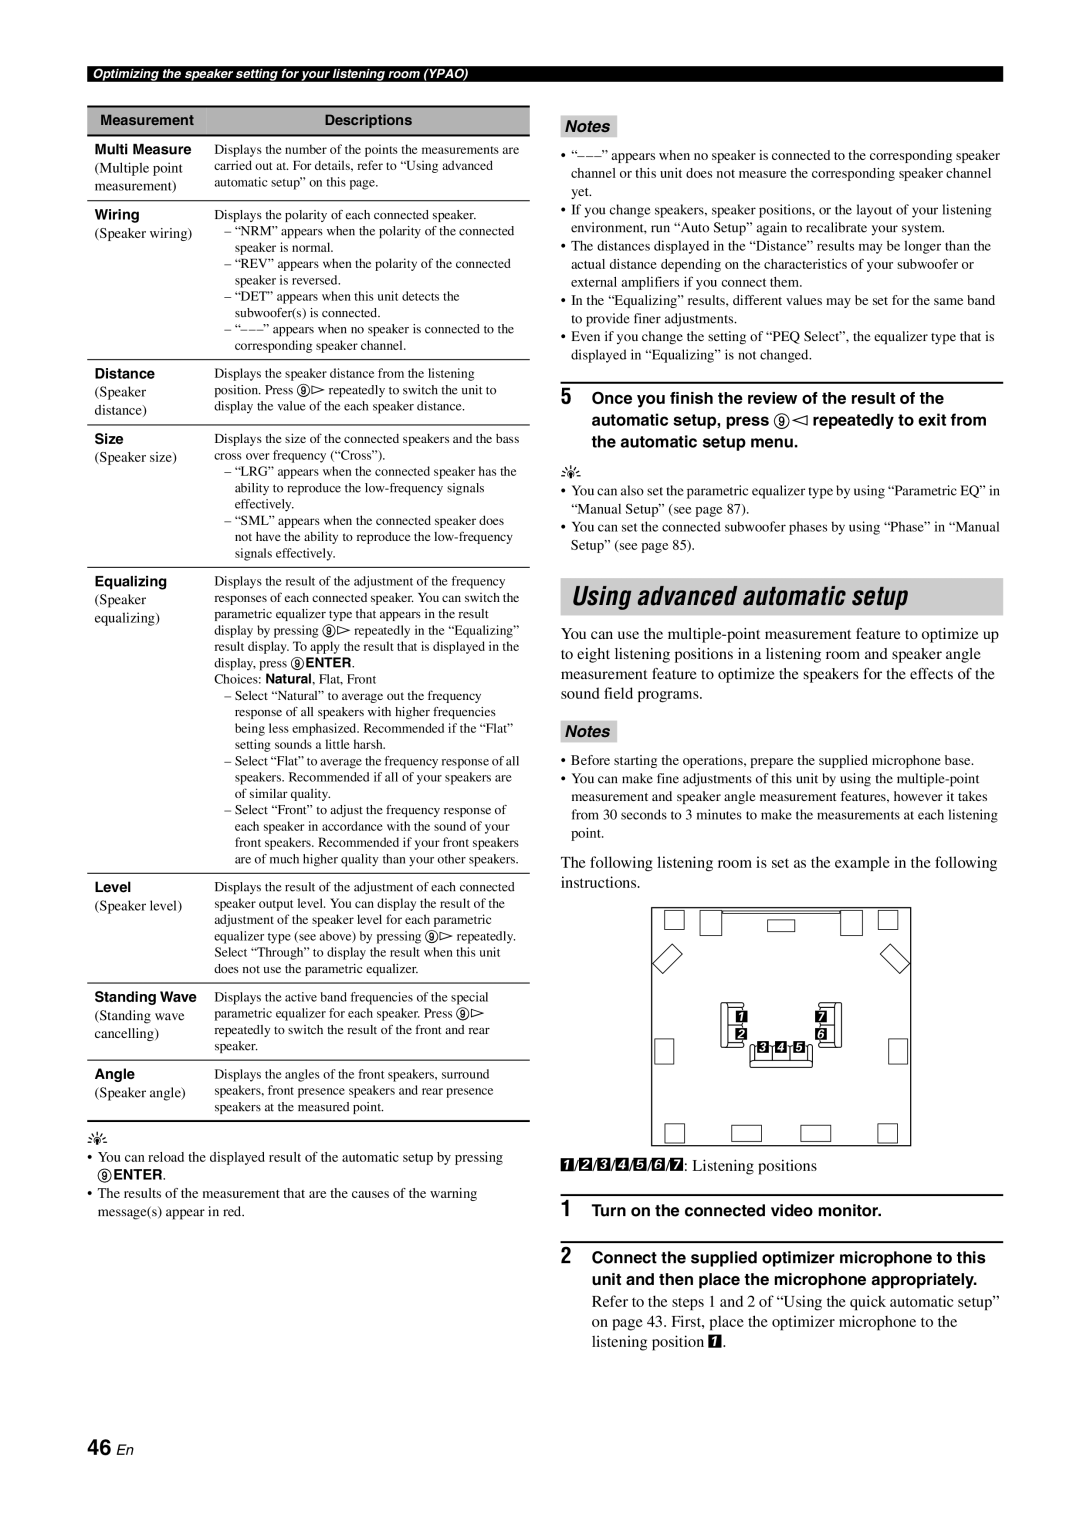 Yamaha DSP-Z11 owner manual Using advanced automatic setup, 46 En, Notes 